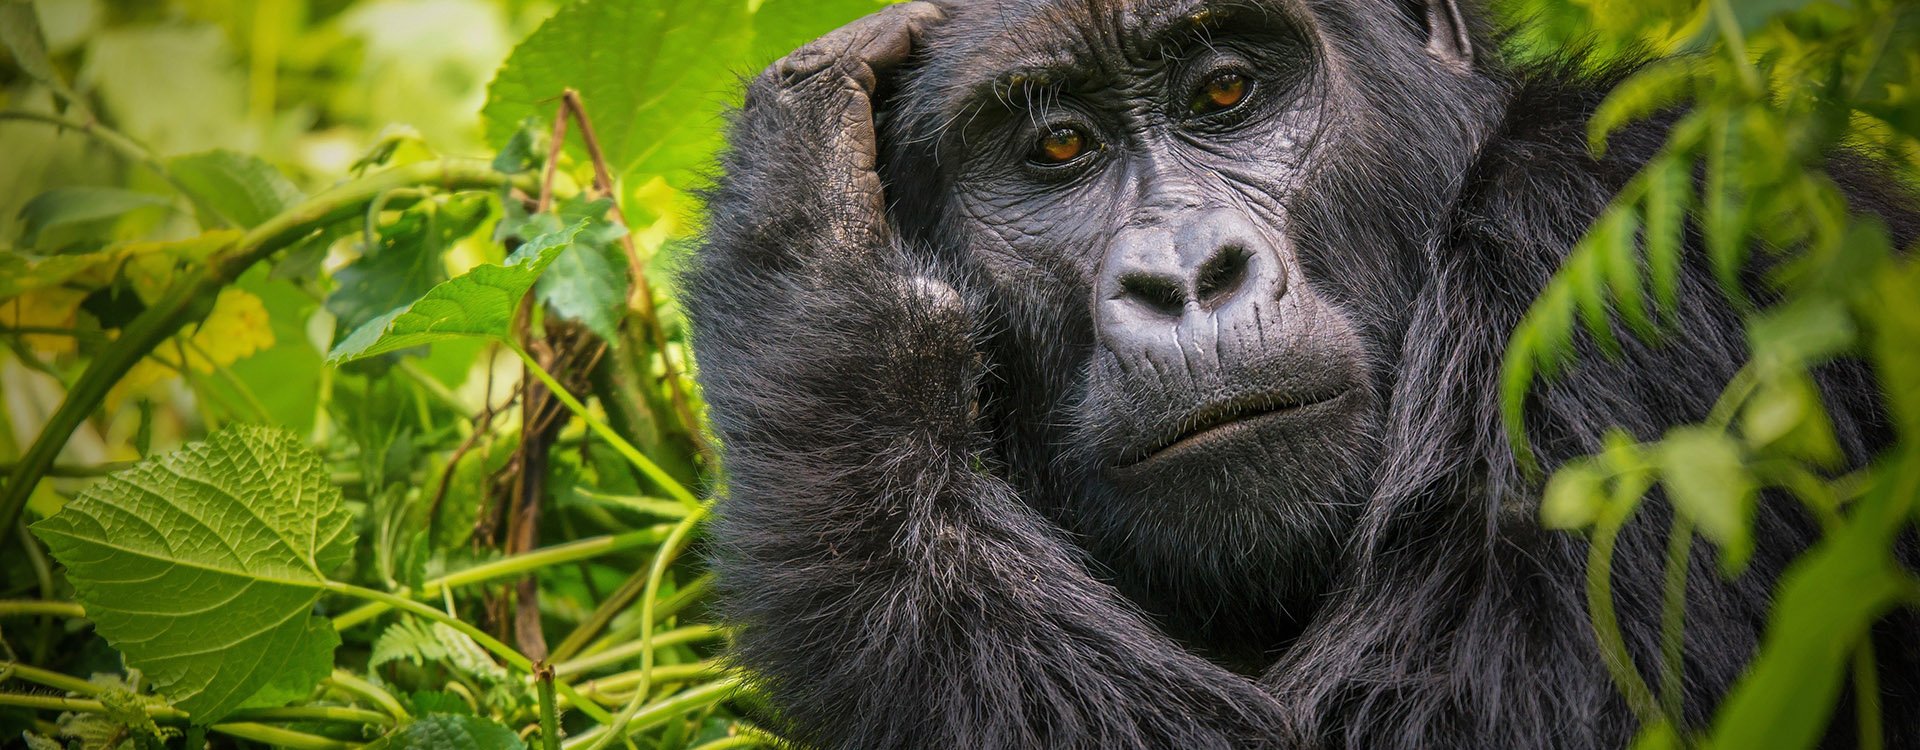 Close up of gorilla touching head